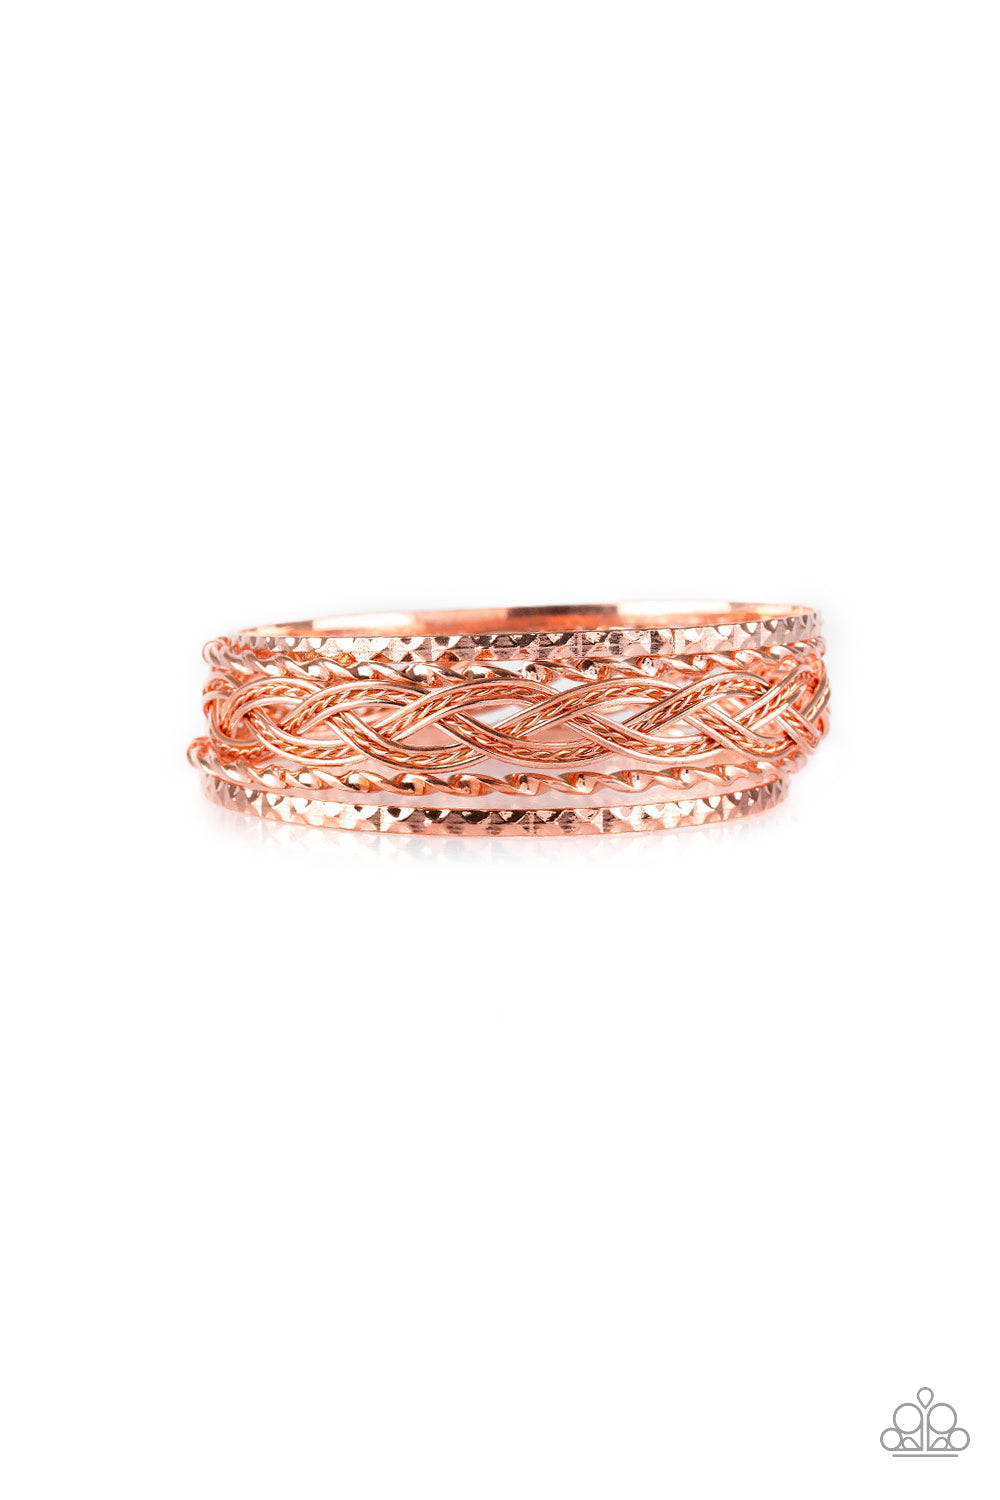 Straight Street - Copper - VJ Bedazzled Jewelry